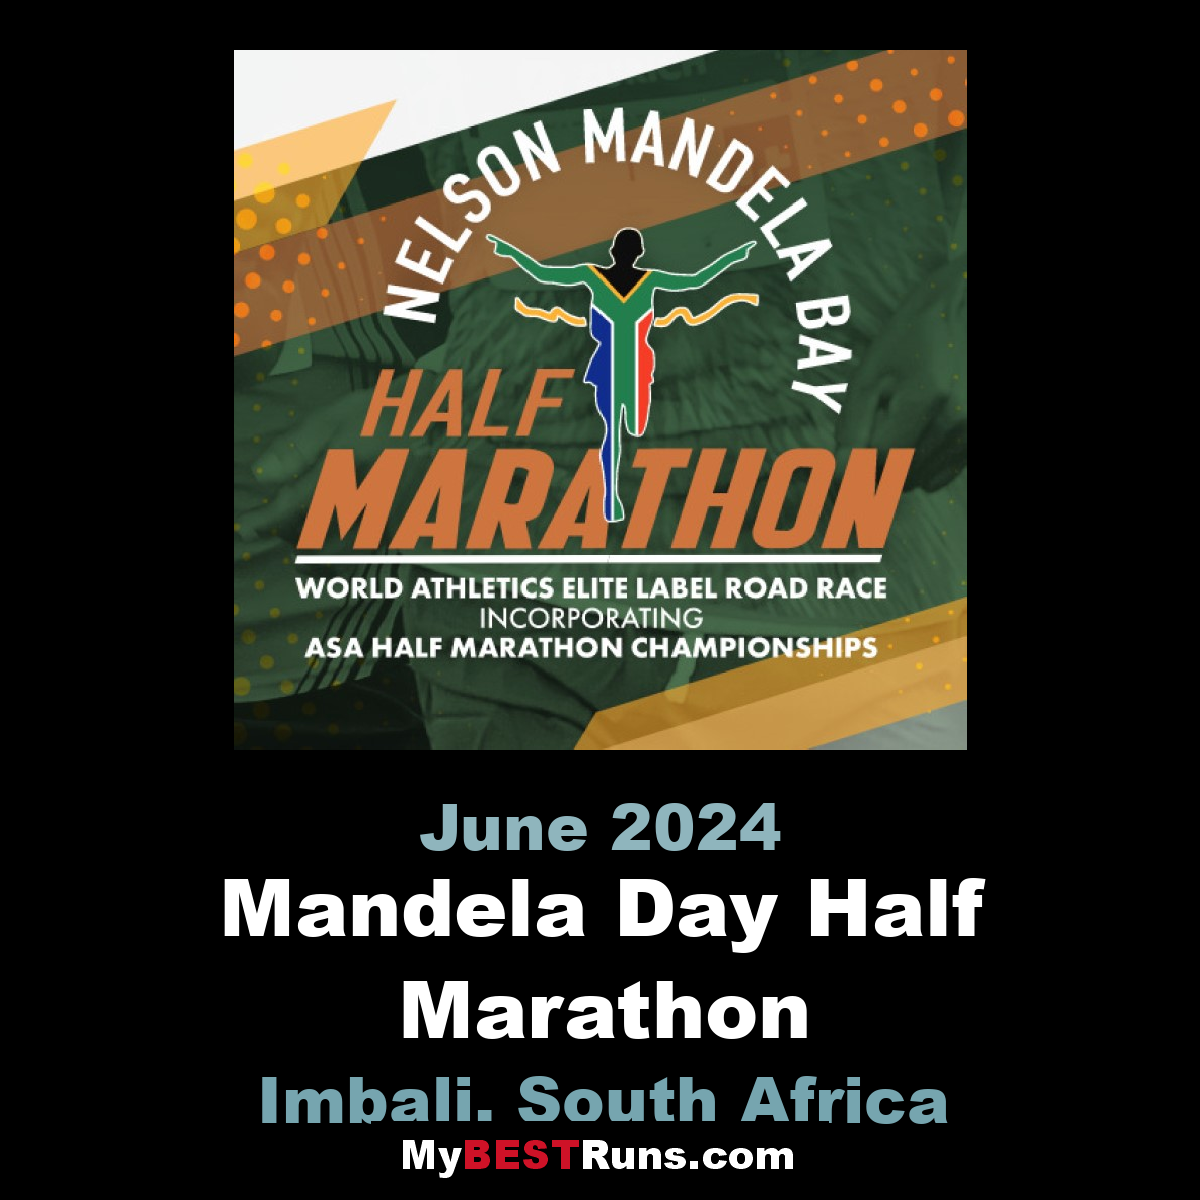 Mandela Day Half Marathon